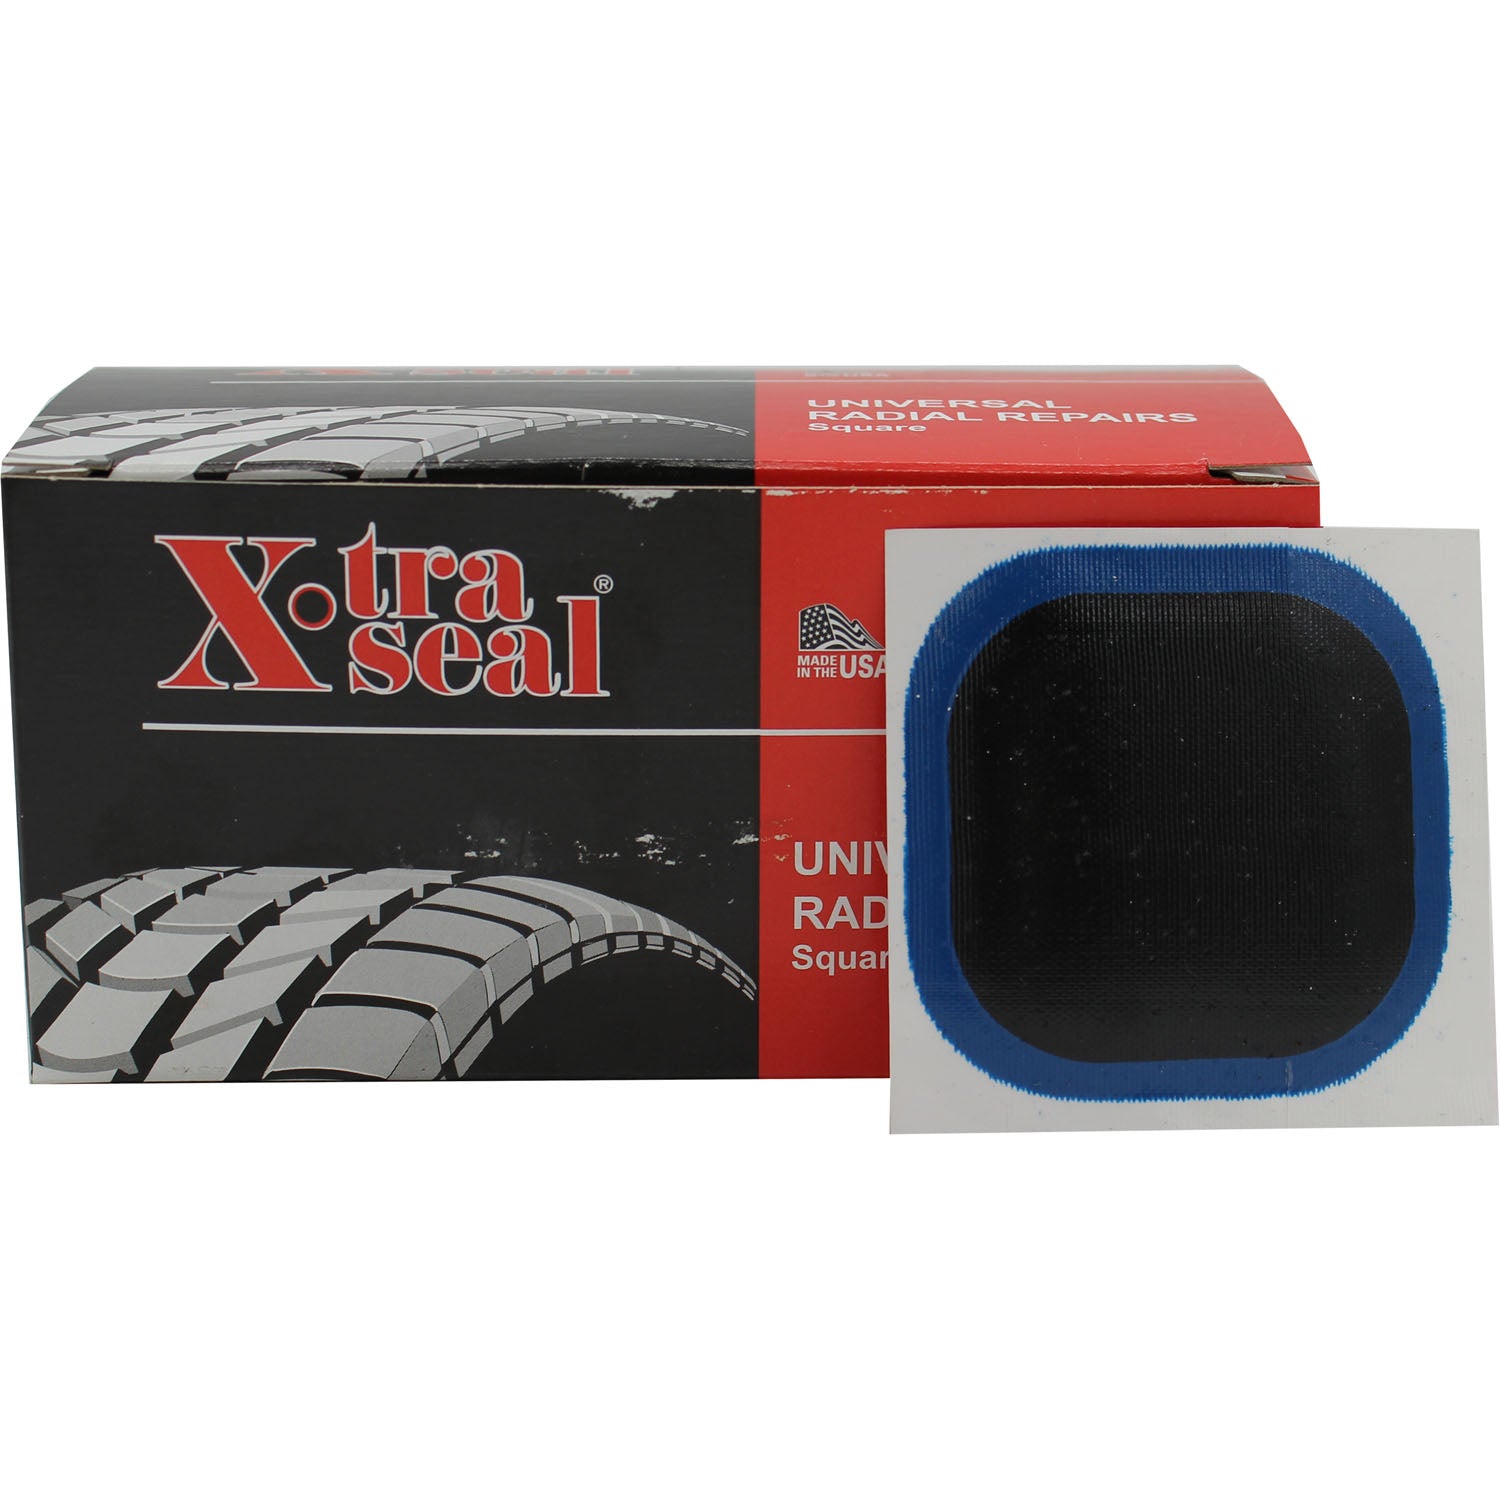 Xtra Seal 11-311 2-1/4" Medium Square Universal Tire Repair Patch Box of 50